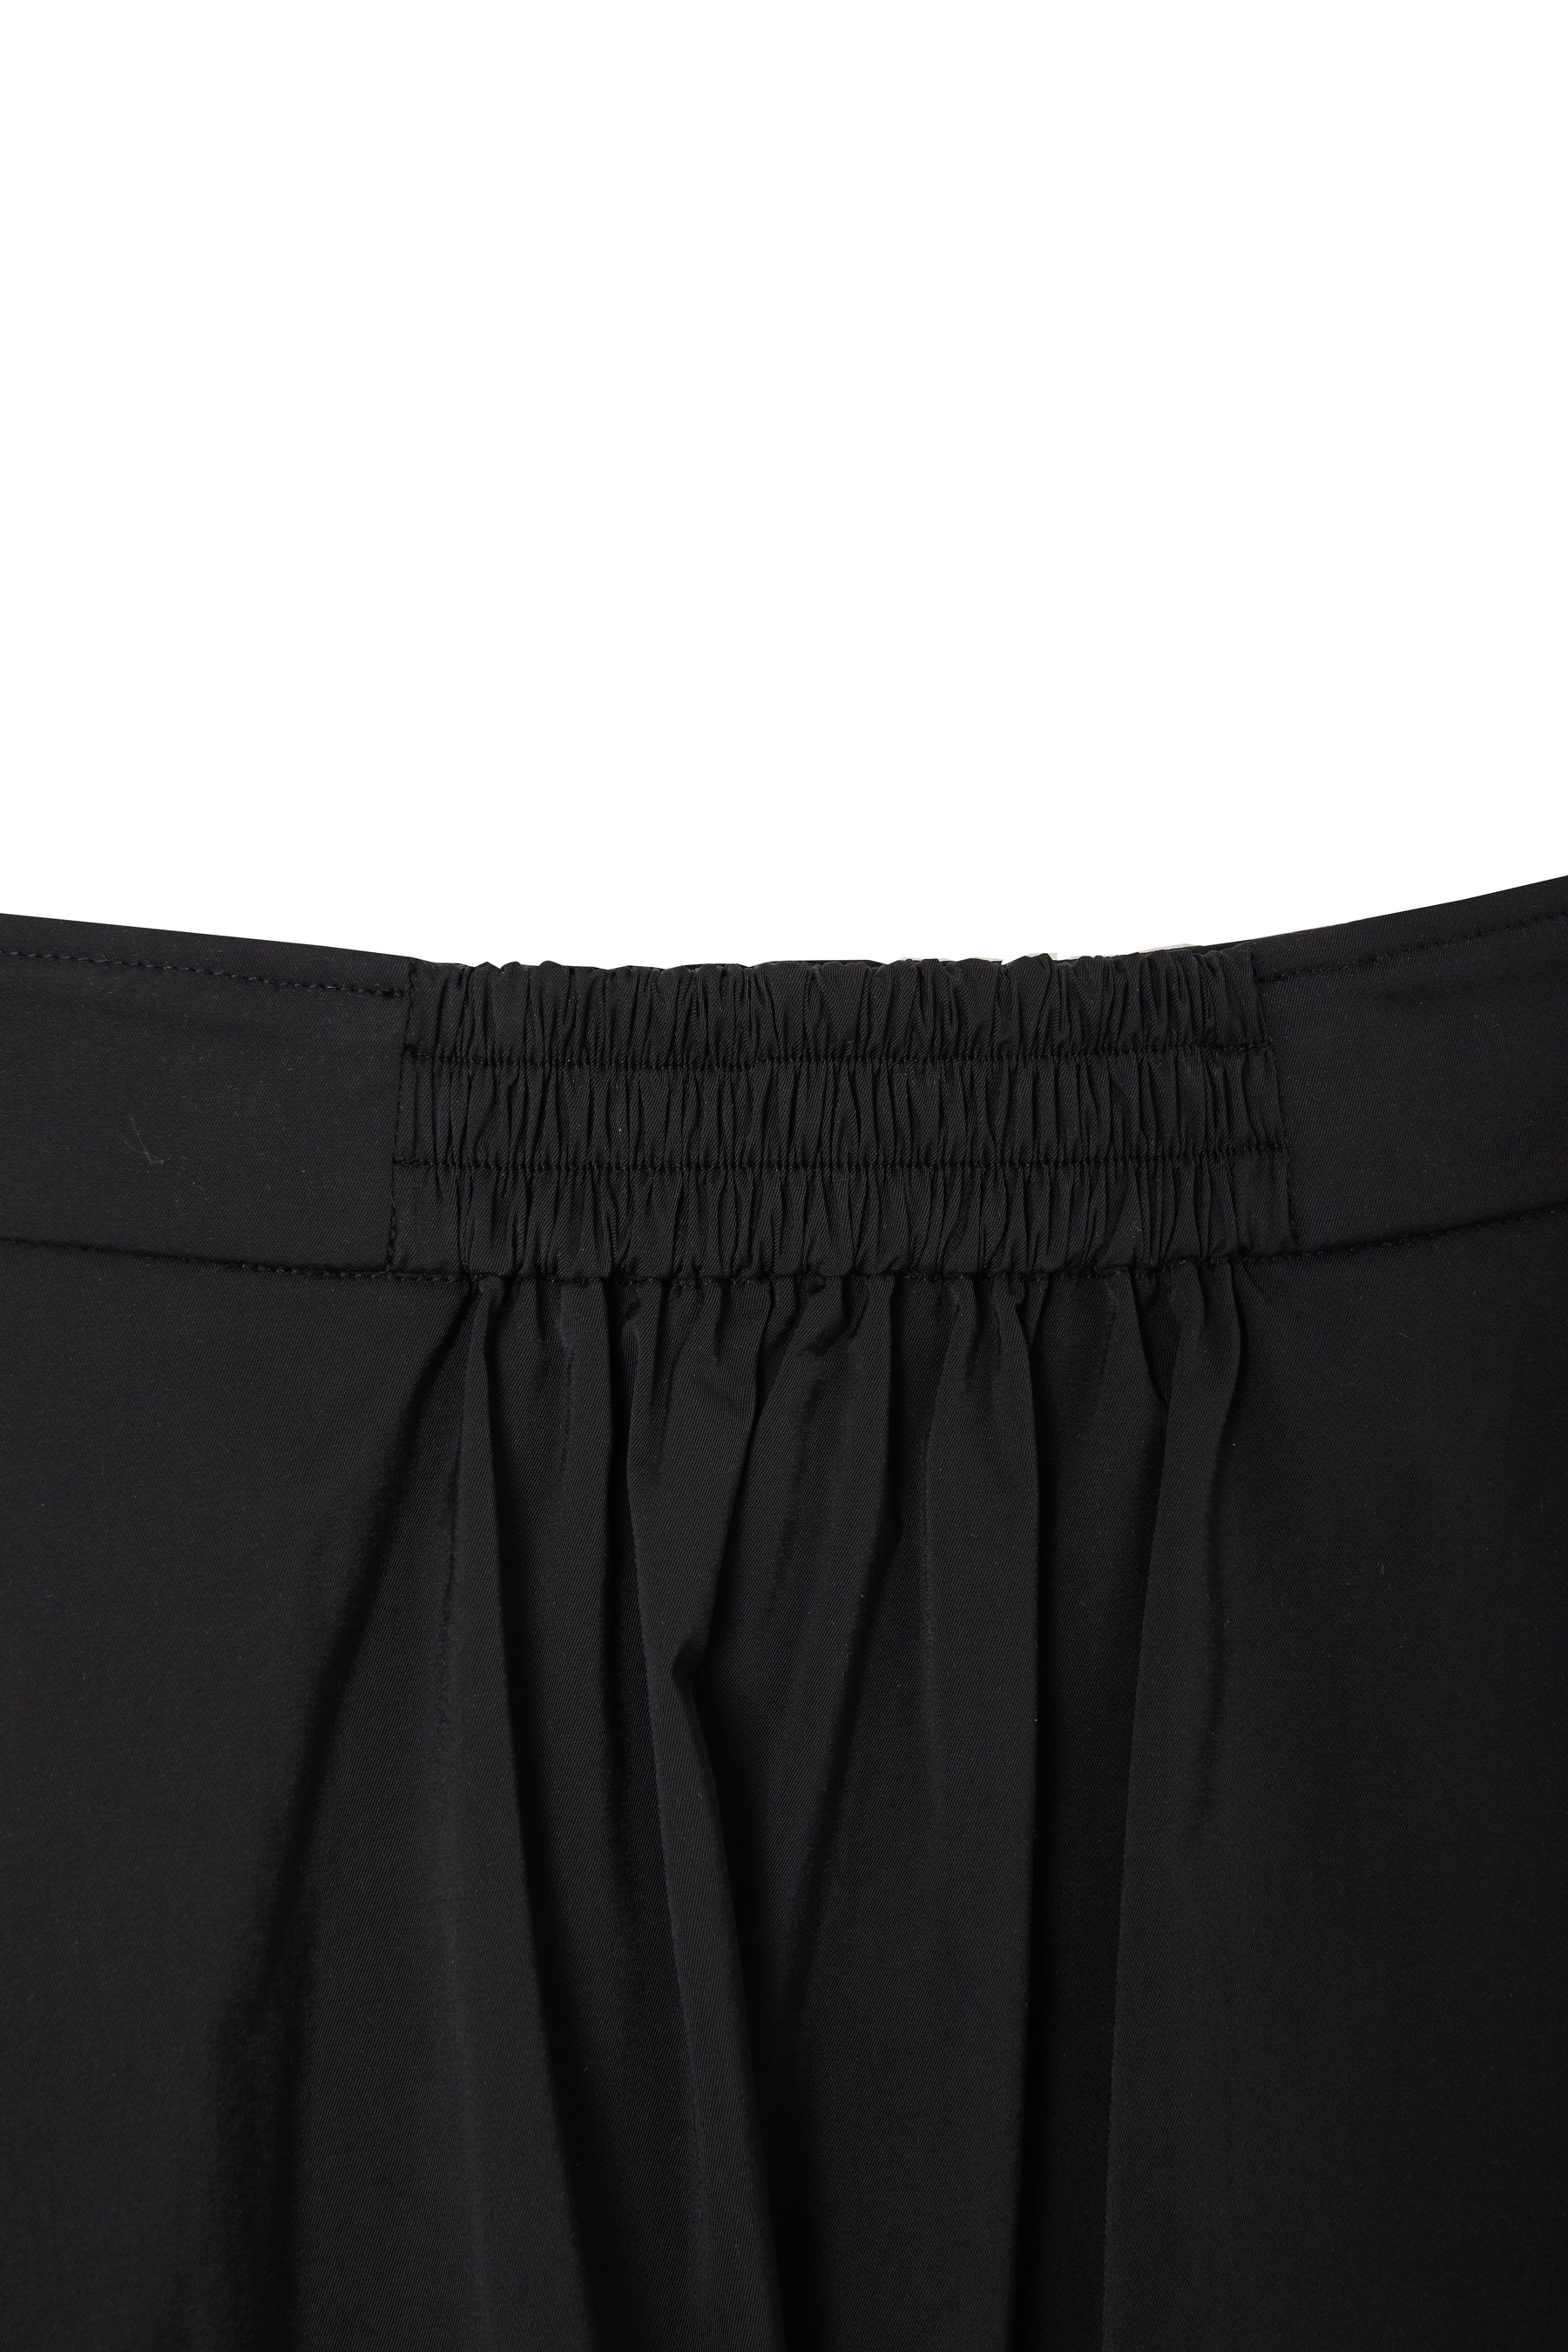 [New color] Tallinn Asymmetric Long Skirt